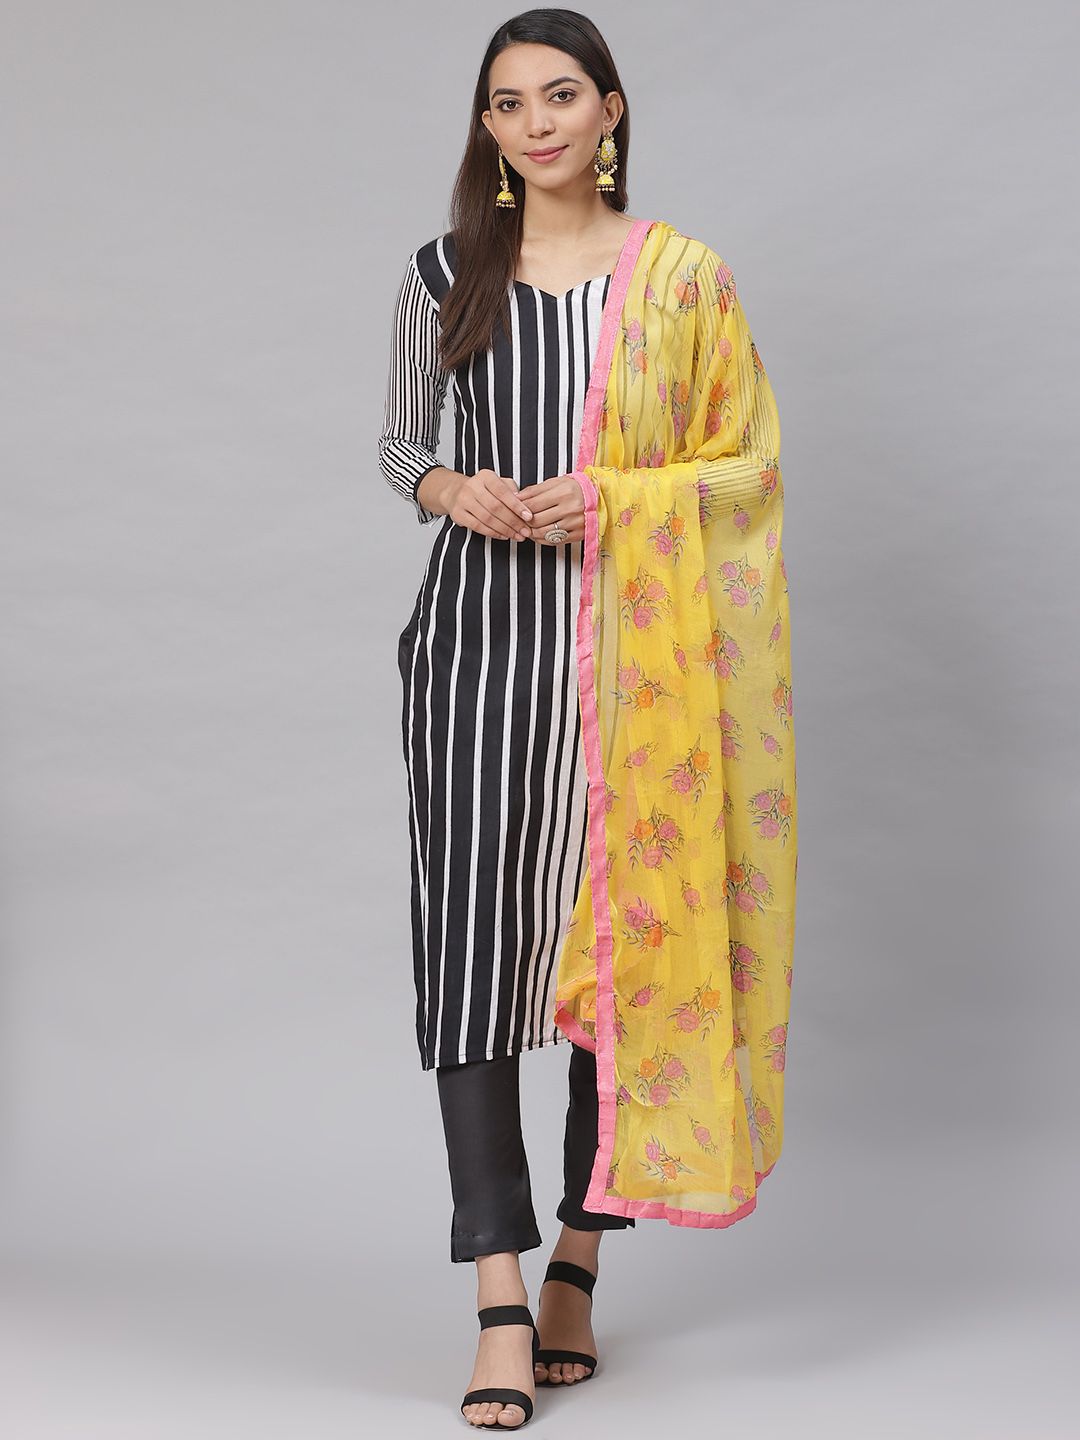 Saree mall Black & White Striped Semi-Stitched Dress Material Price in India